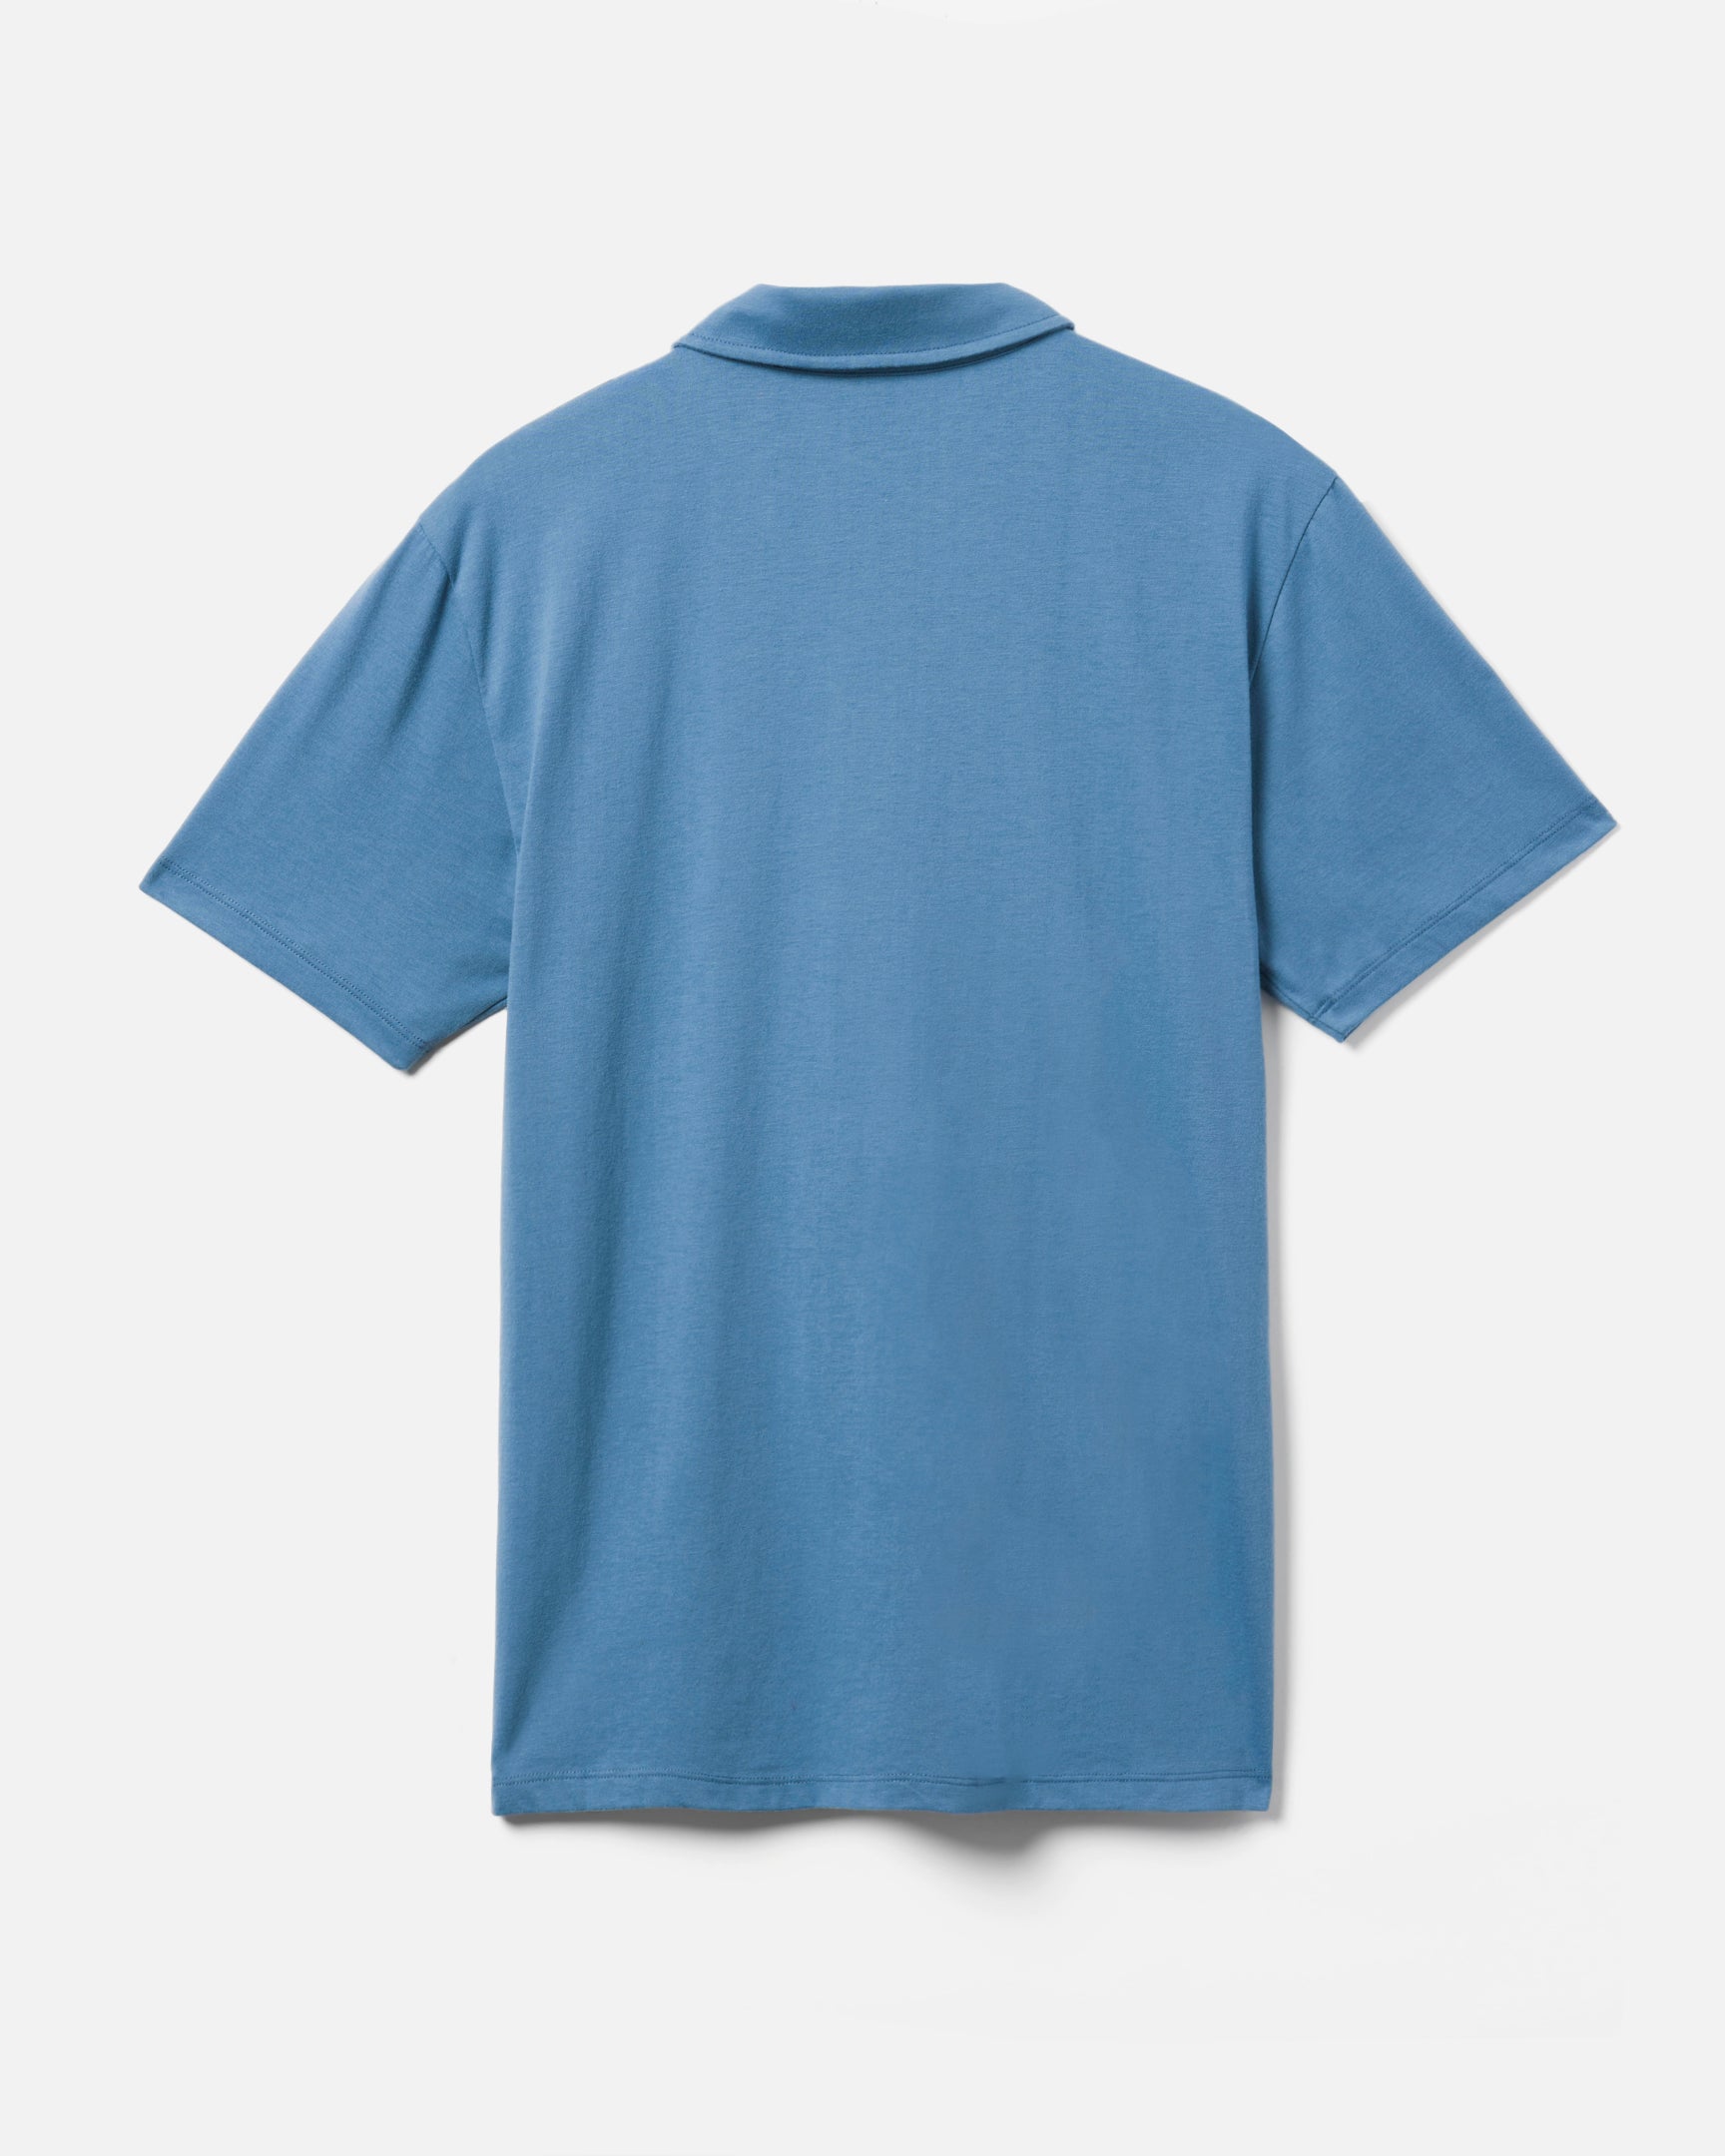 Ma-co Slim Fit Woven Polo Short Sleeves Plain Blue – Metro Market